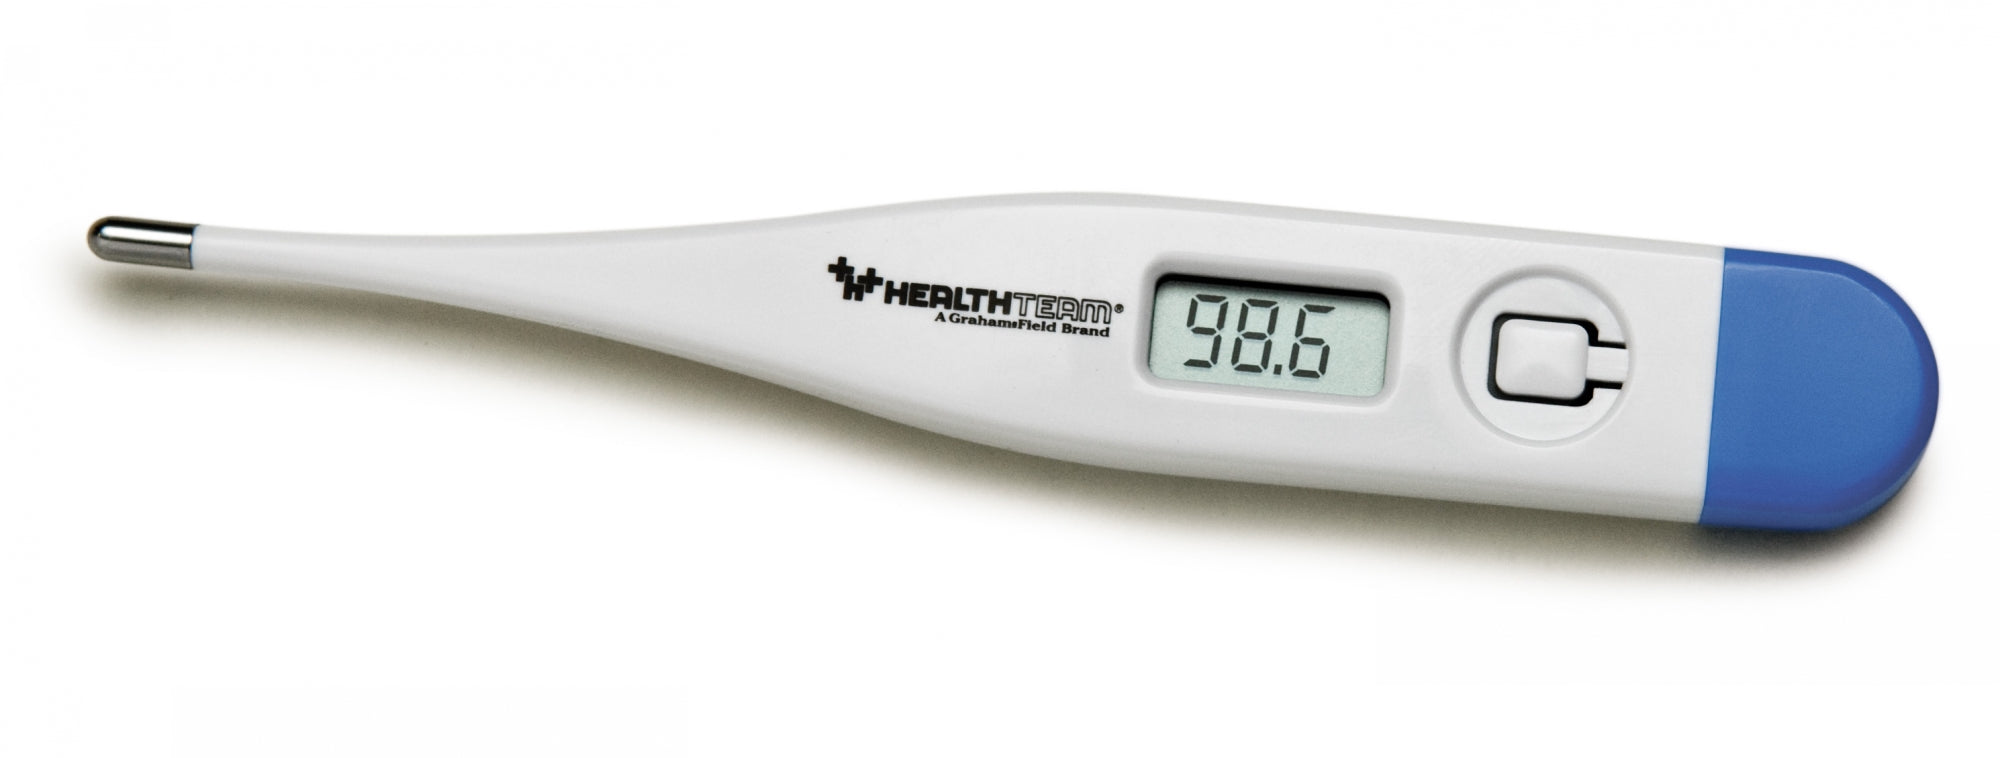 Digital Thermometer Rigid Tip